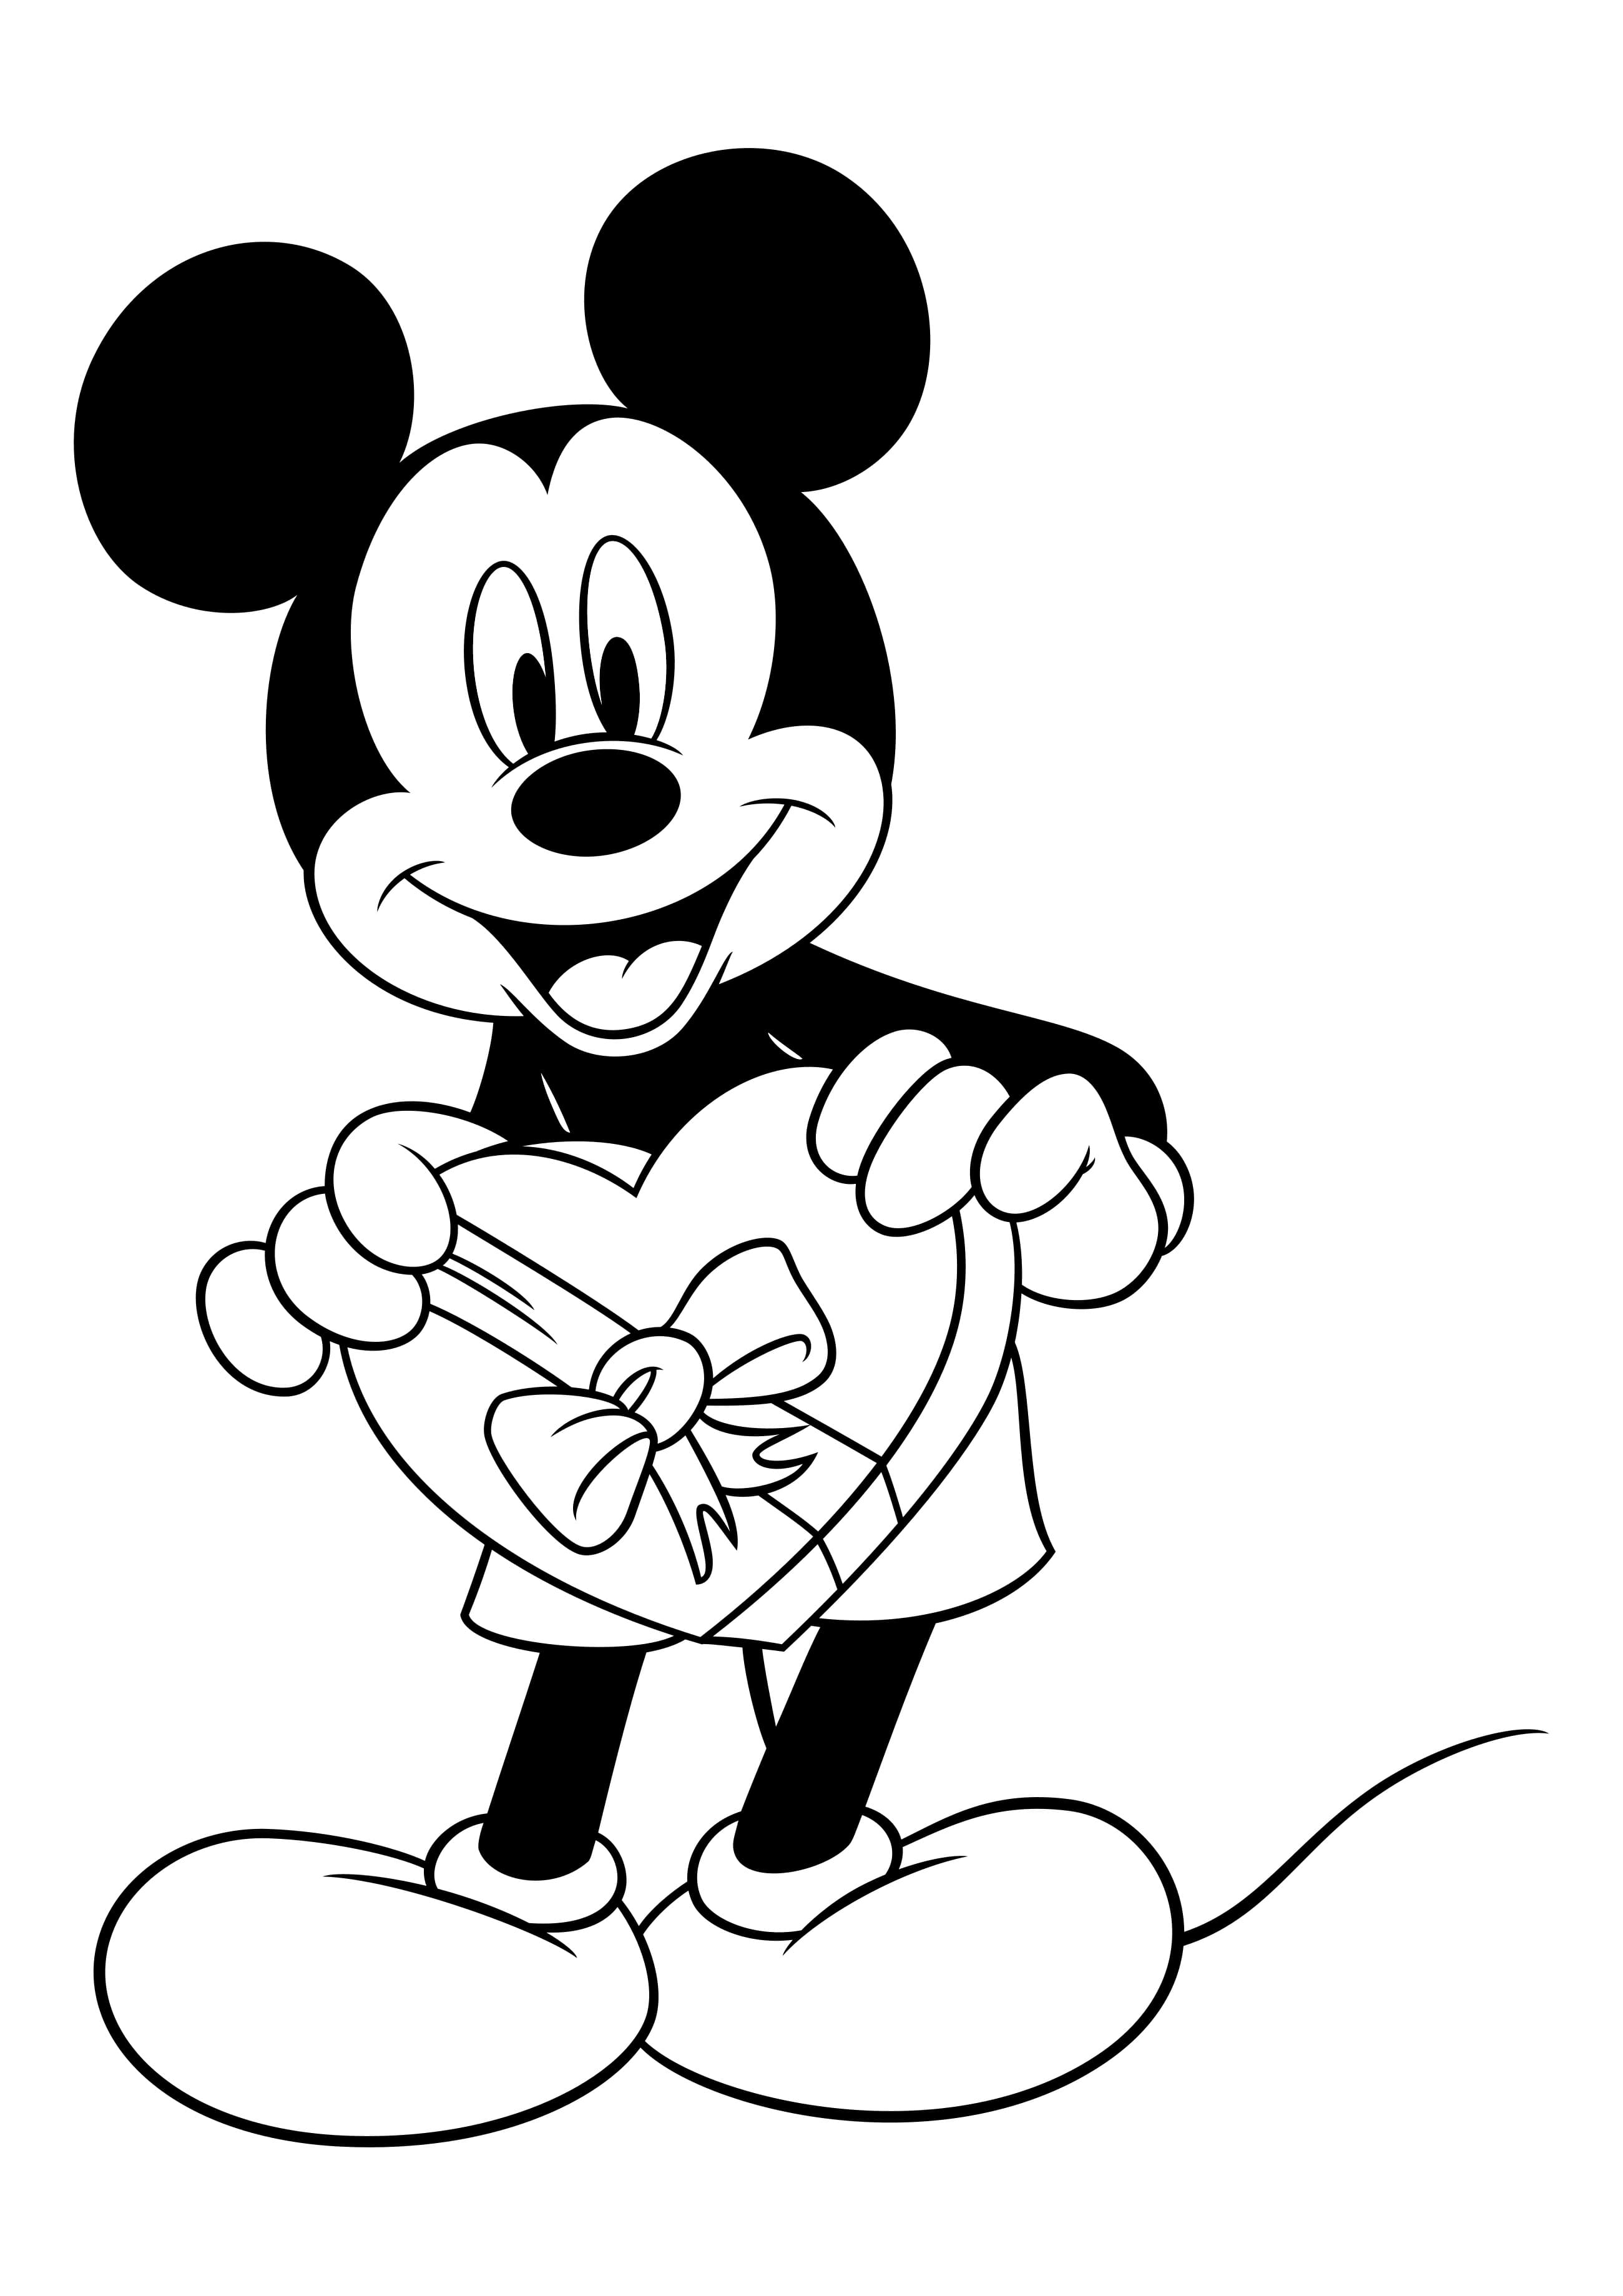 Para Colorir Dia de São Valentim Mickey Mouse dá doces para Minnie Mouse